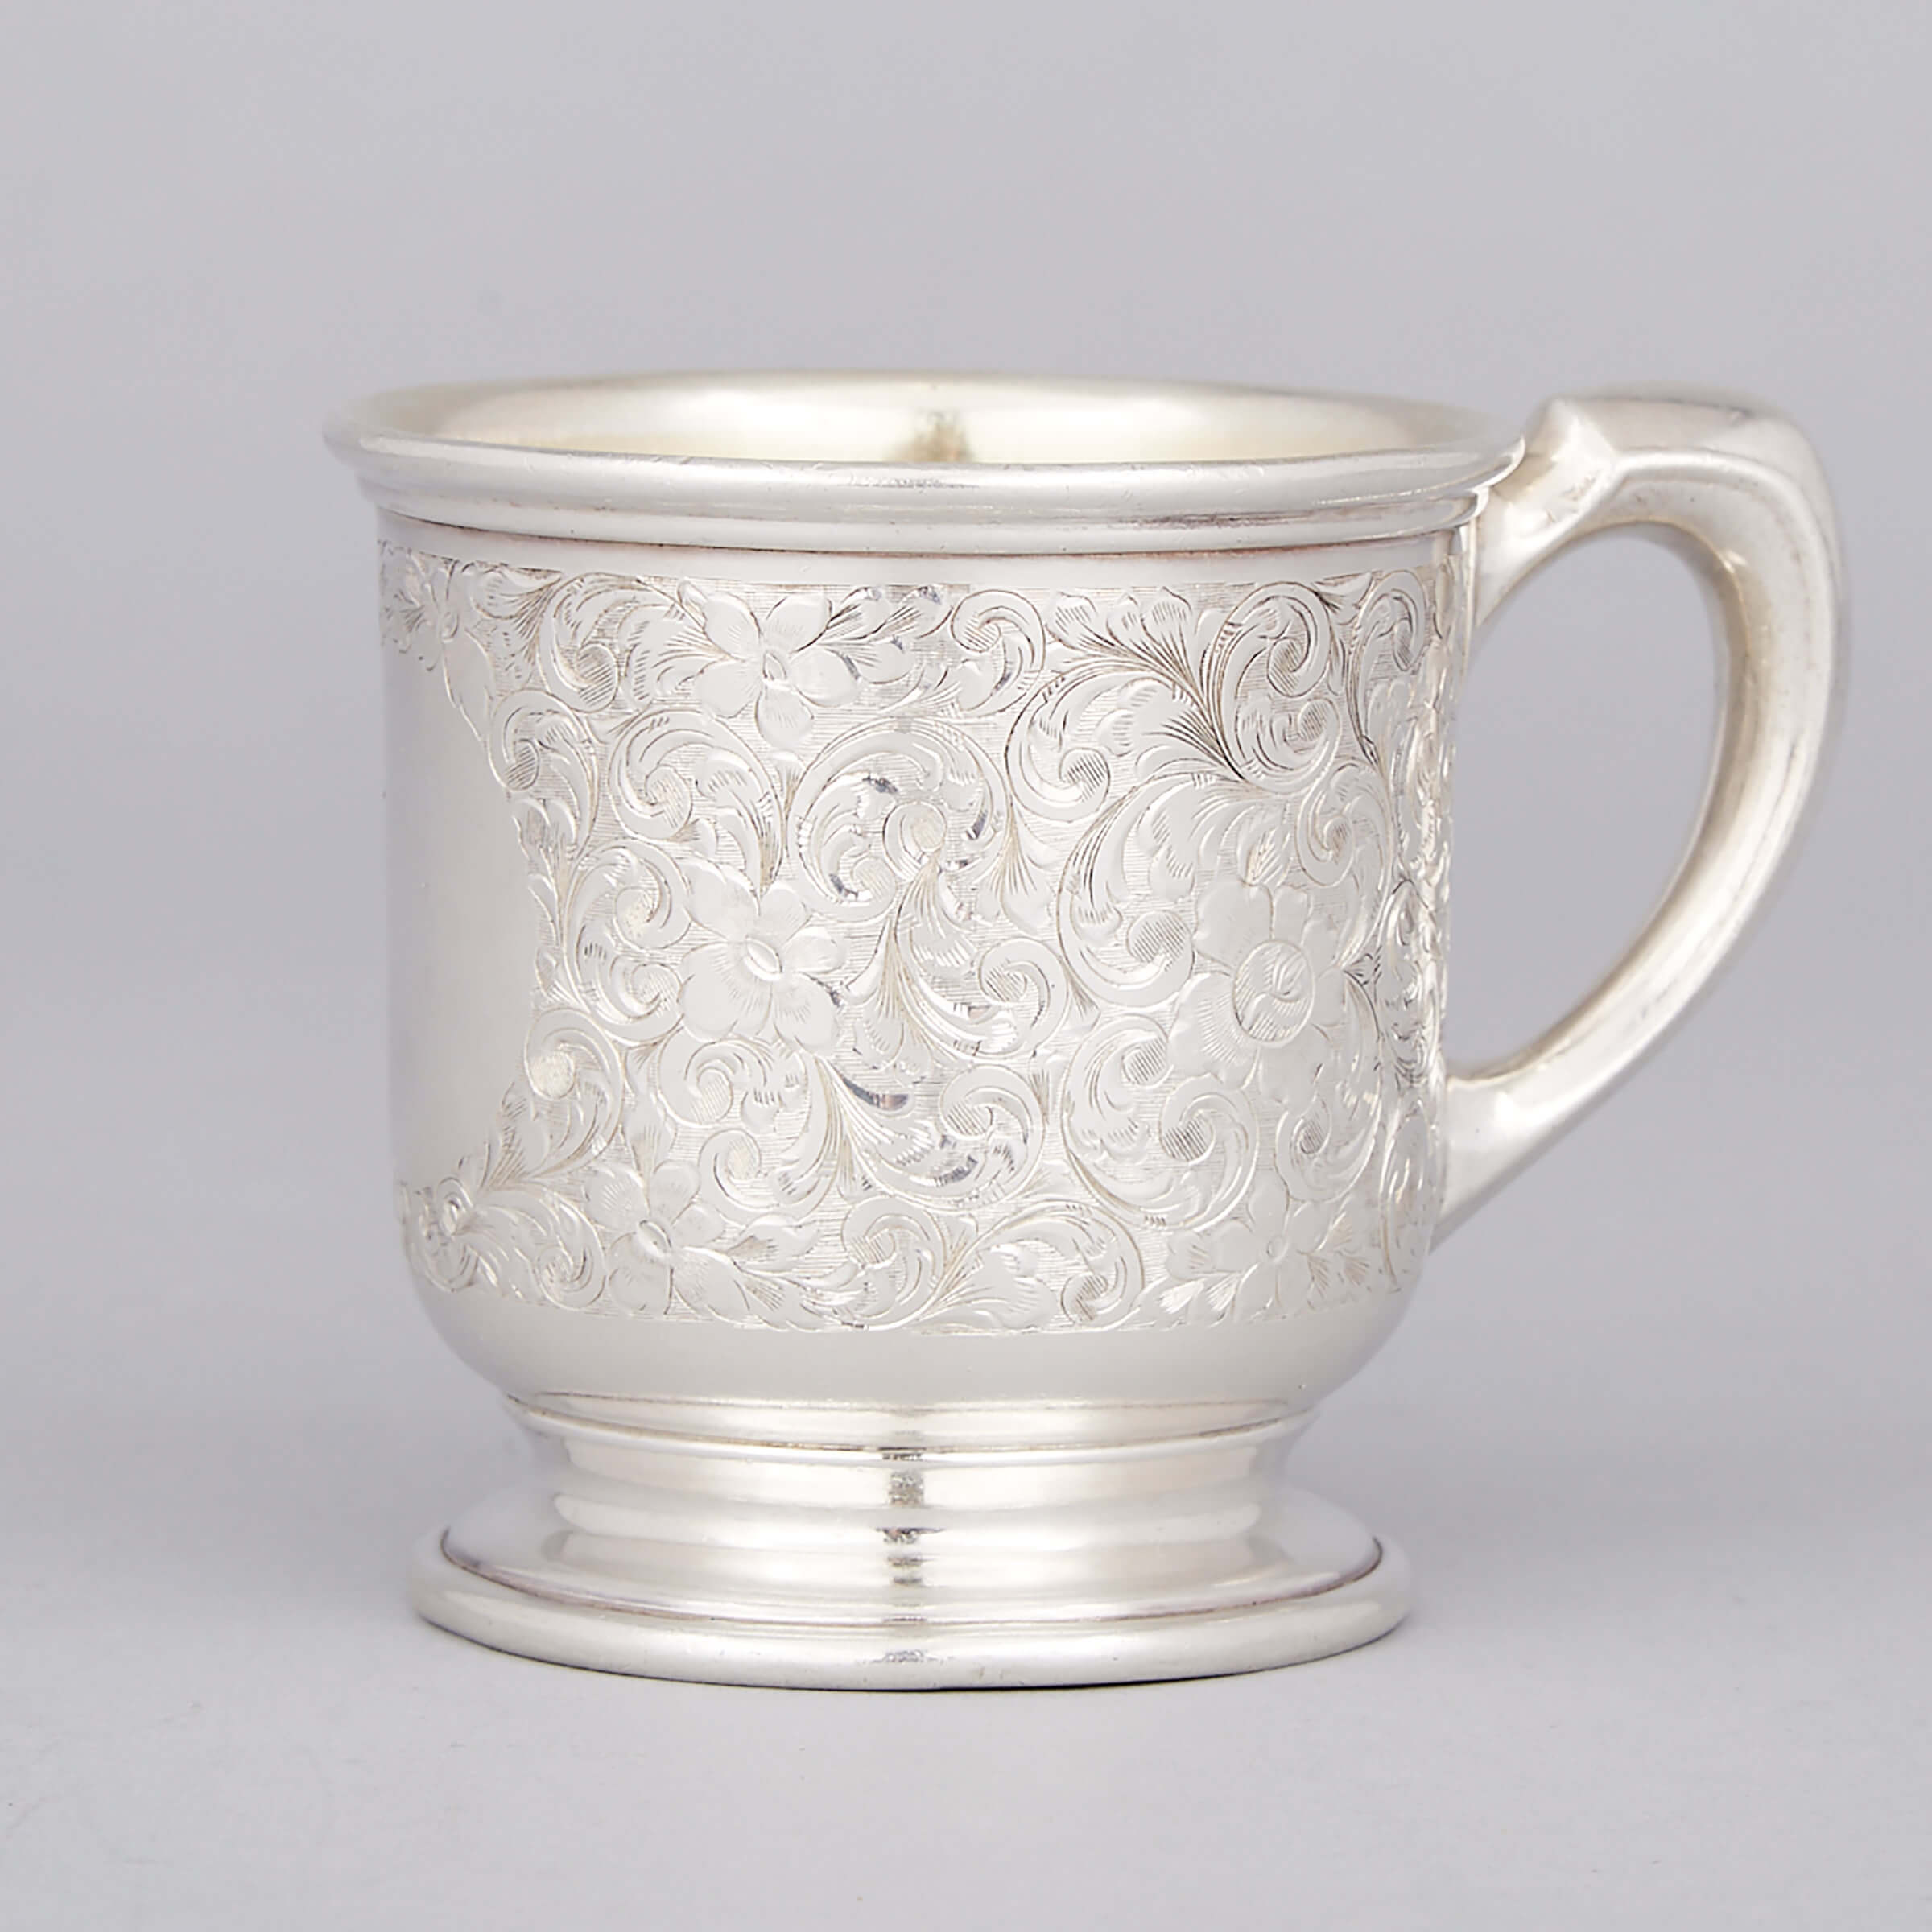 North American Silver Mug, probably Birks, early 20th century 